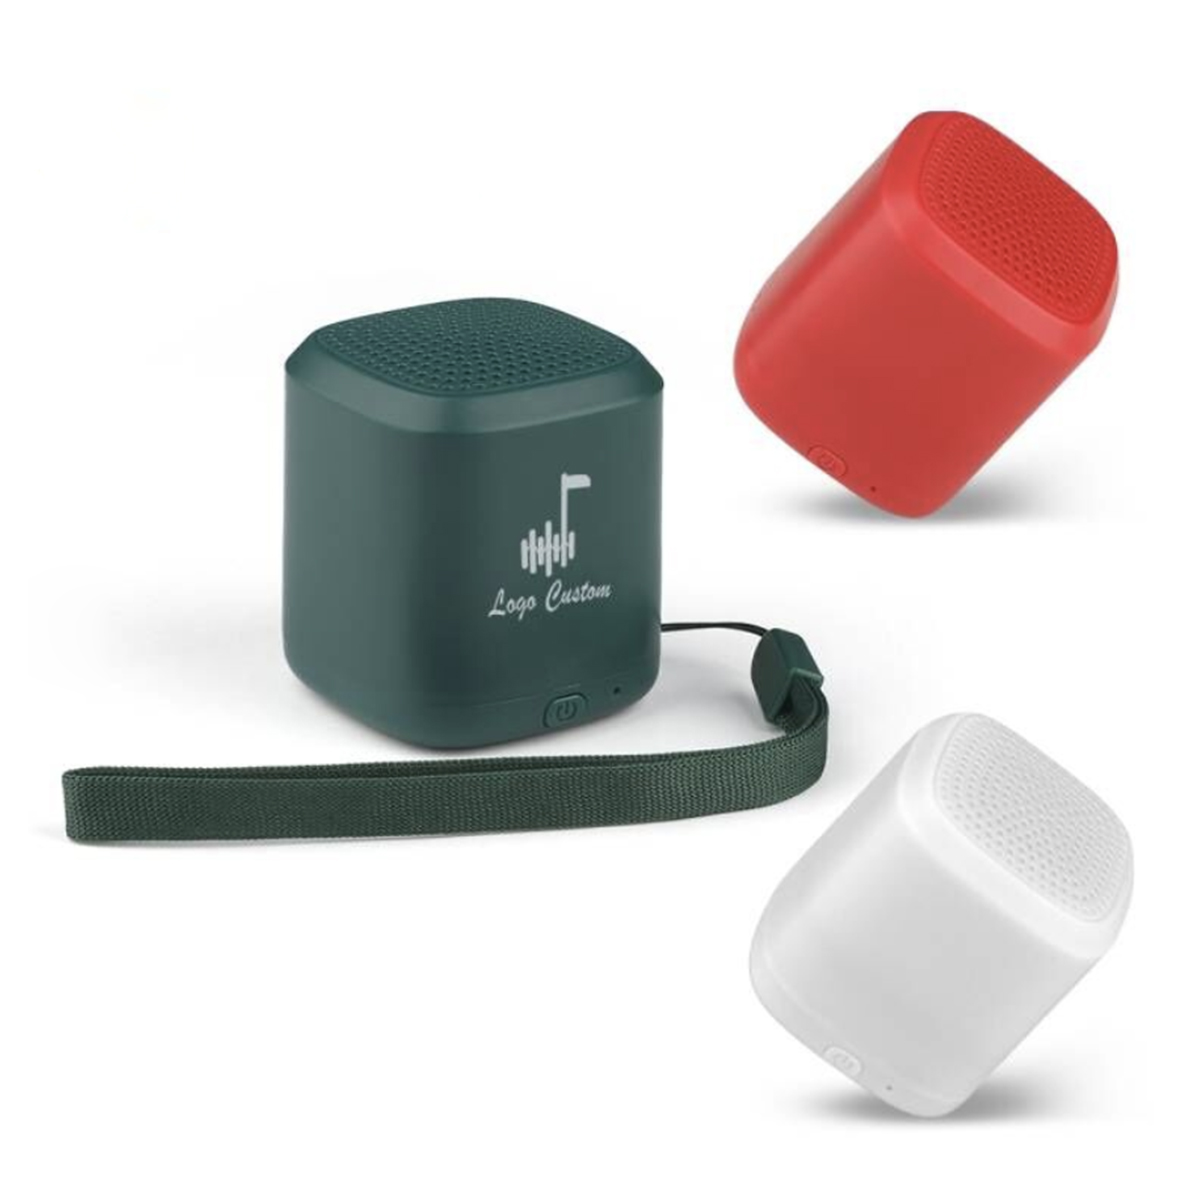 Mini Portable Cube Speaker with Strap